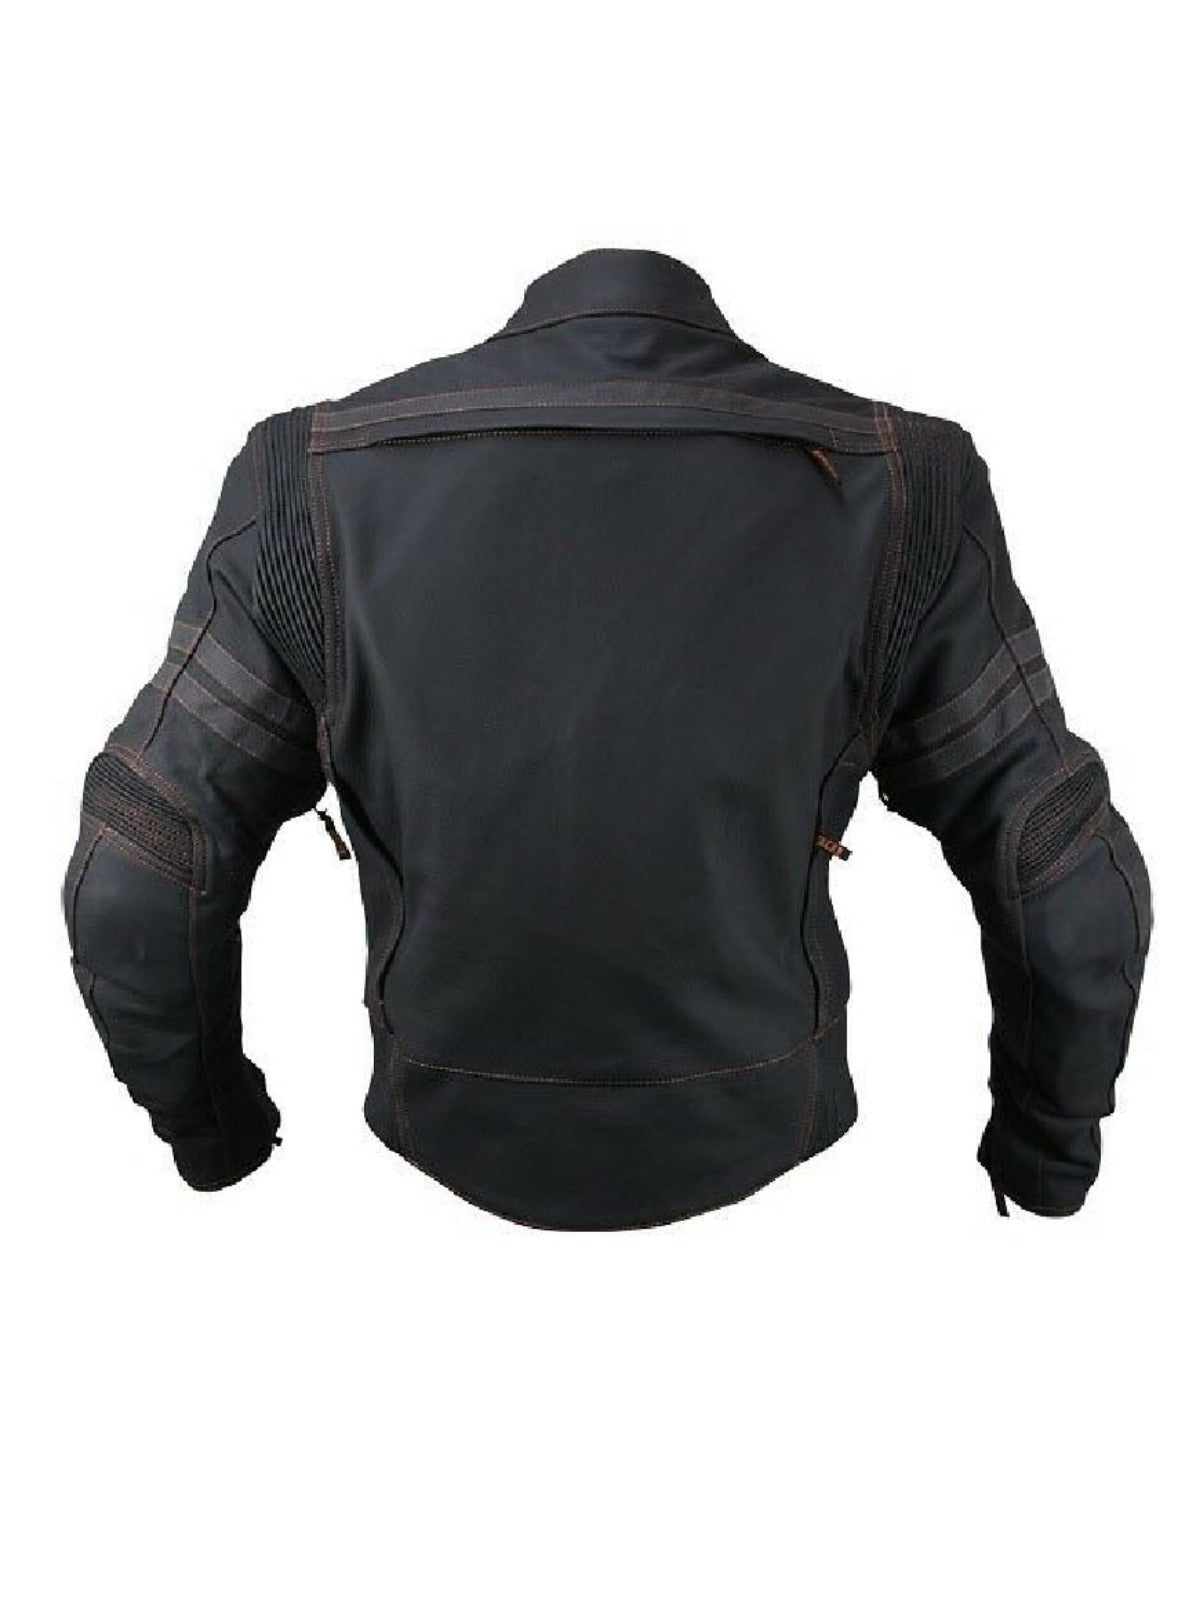 Mens Premium Street Motorcycle Leather Jacket